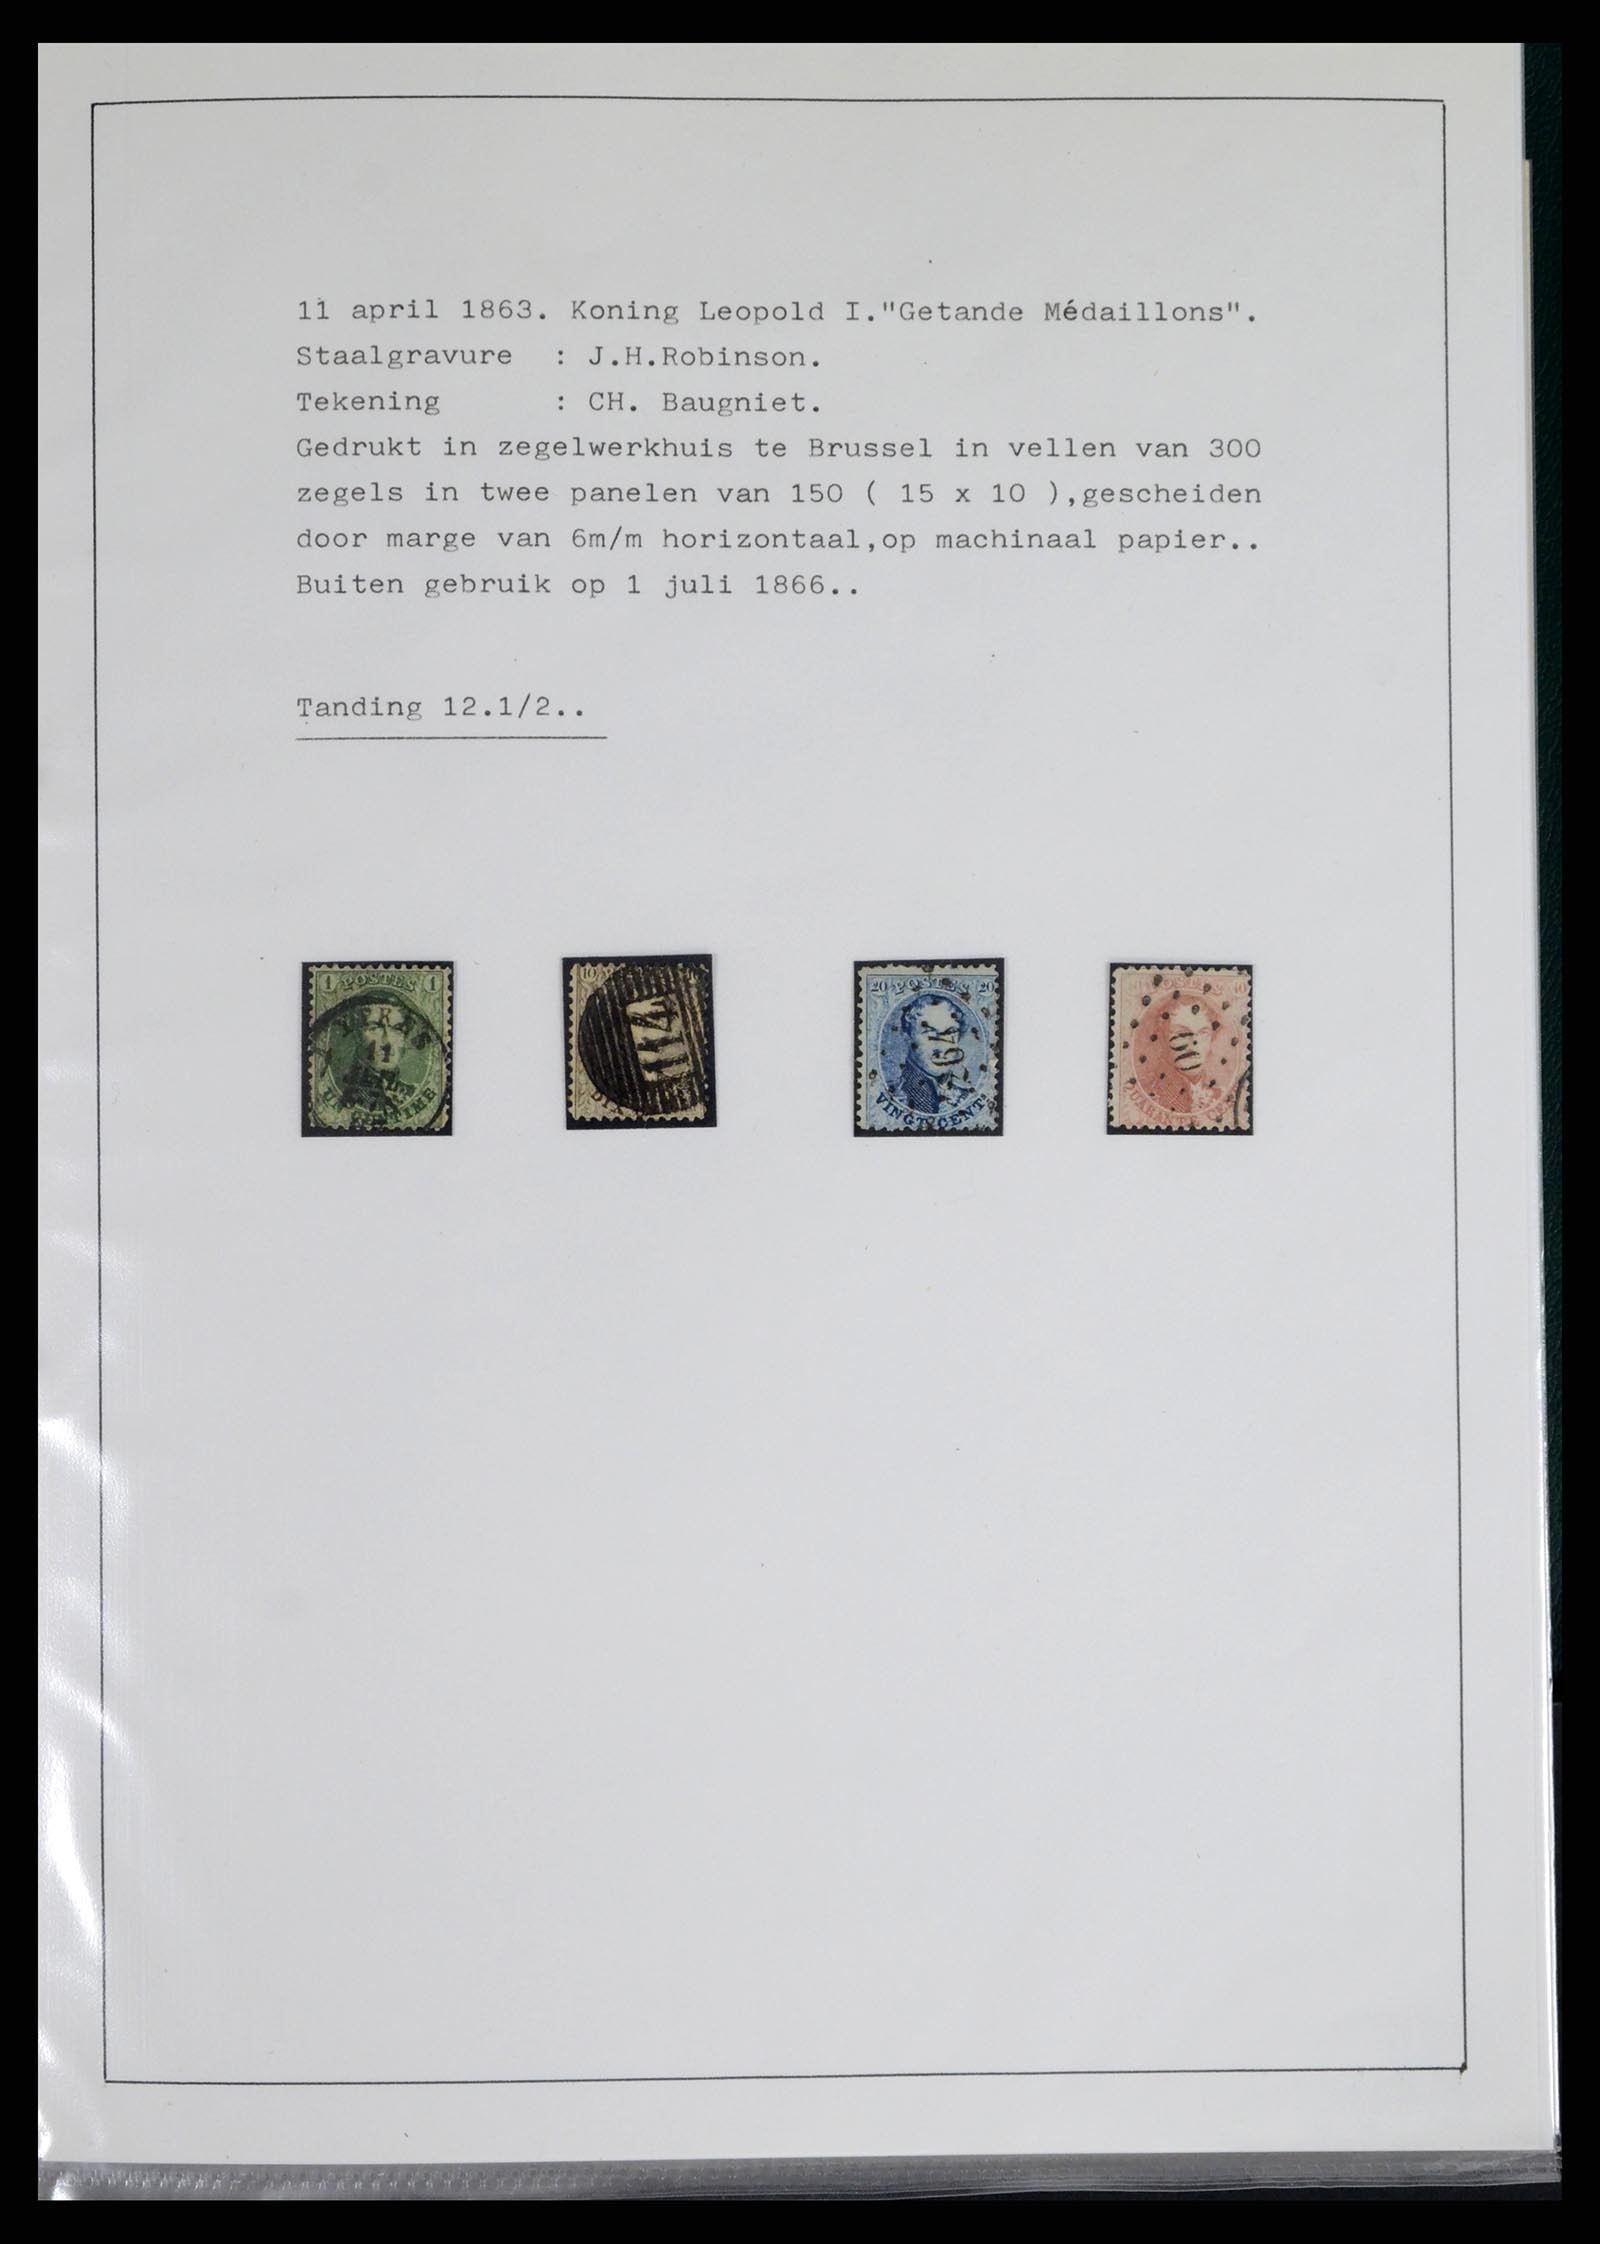 38033 0008 - Stamp collection 38033 Belgiùm classic 1849-1905.